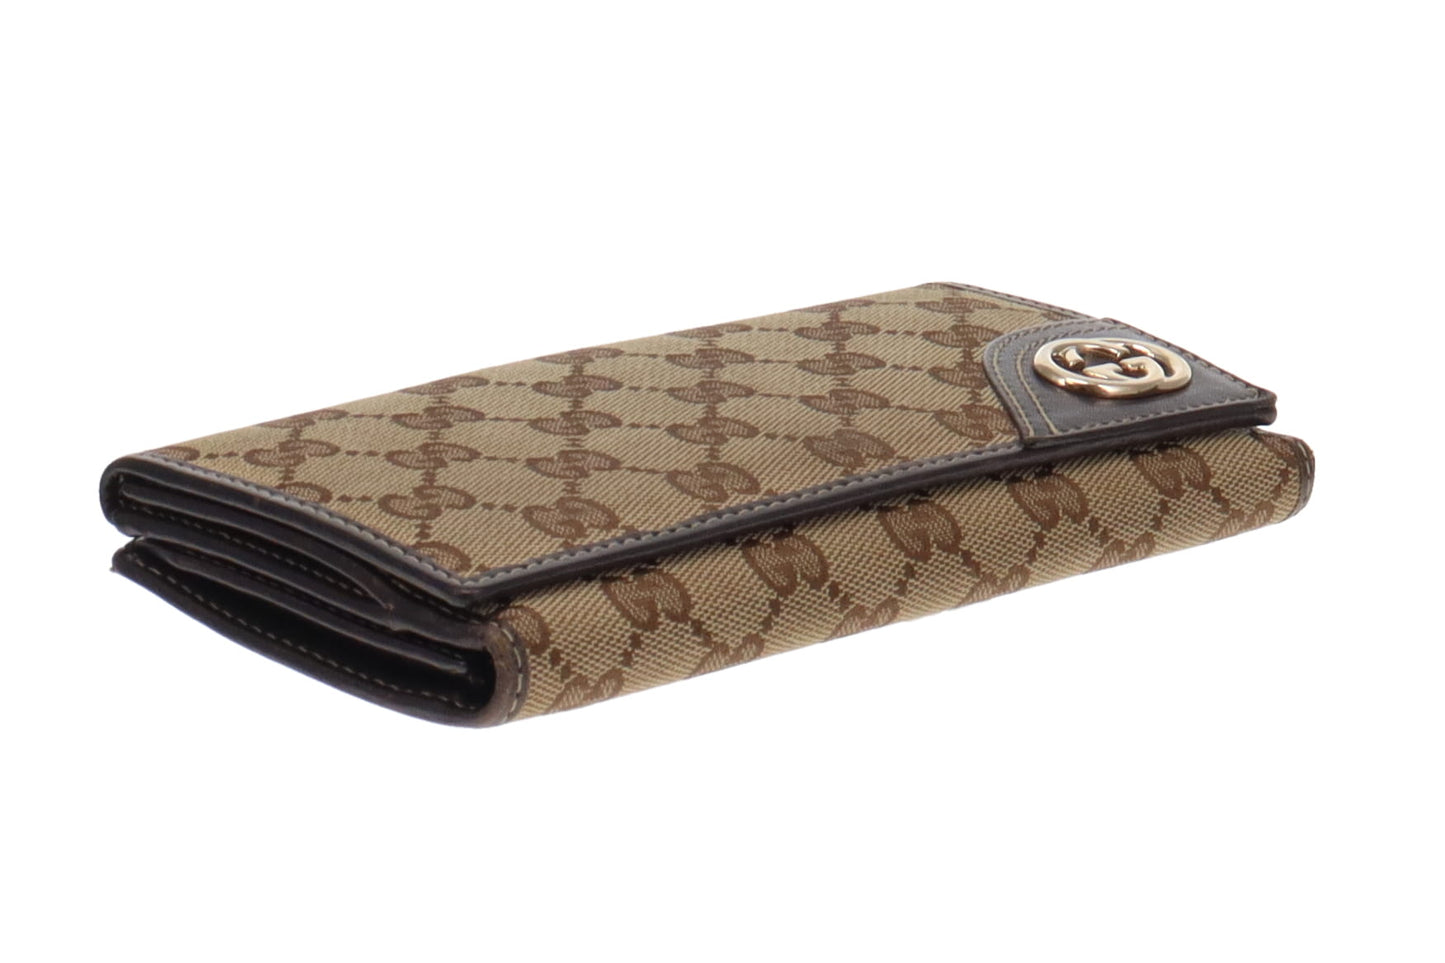 Gucci Vintage GG Continental Flap Sukey Wallet